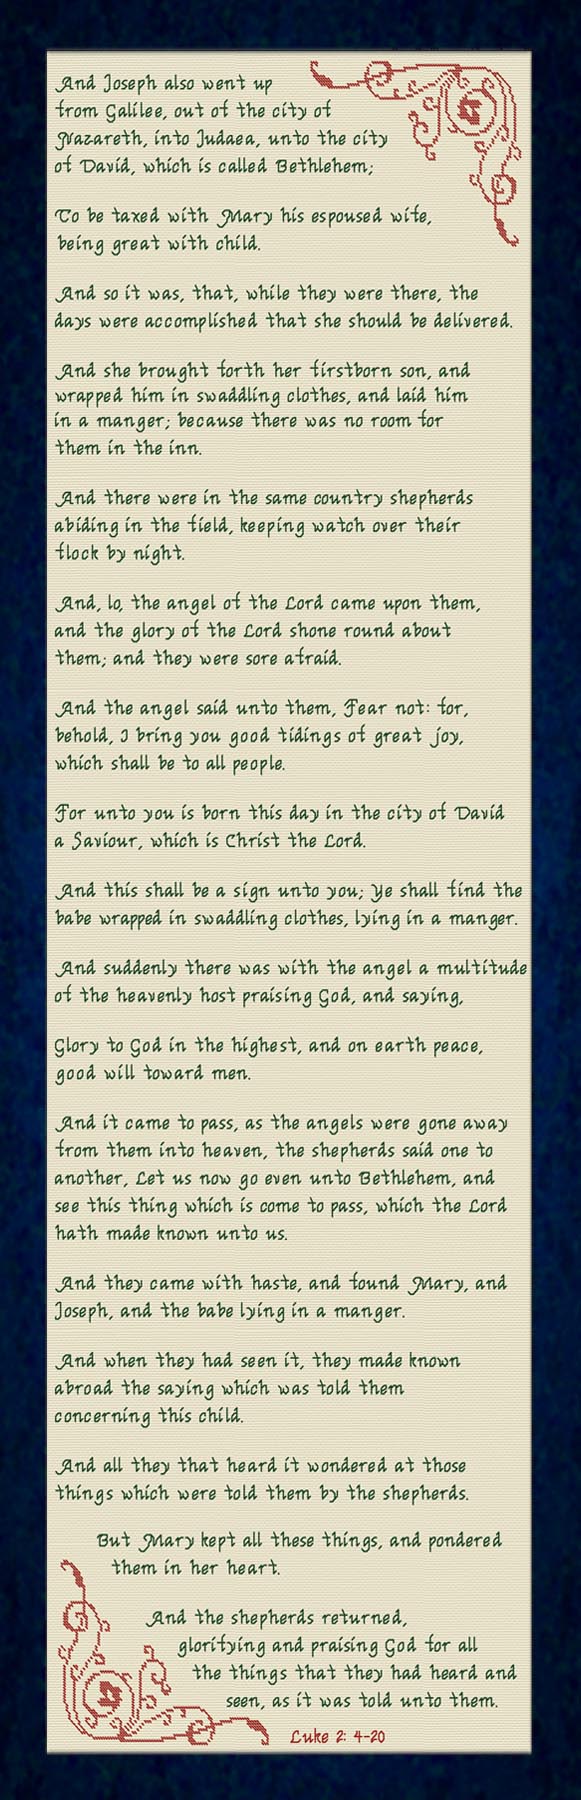 The Christmas Story - Luke 2:4-20